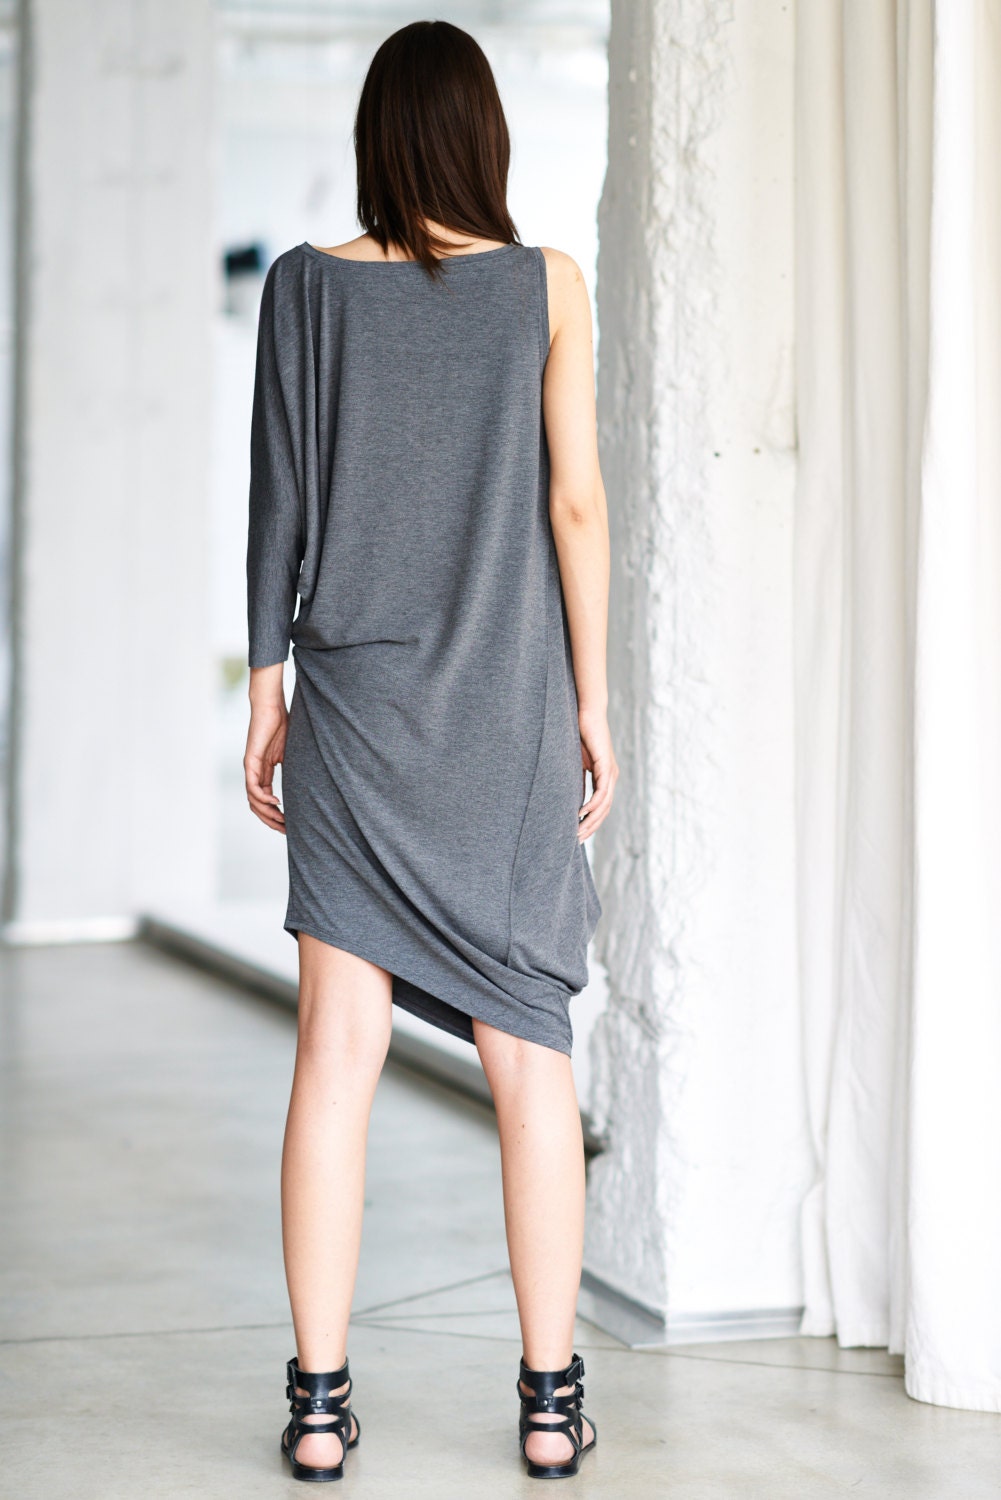 Asymmetrical Dress/ Gray Tunic Top/ Loose Casual Gray Top/